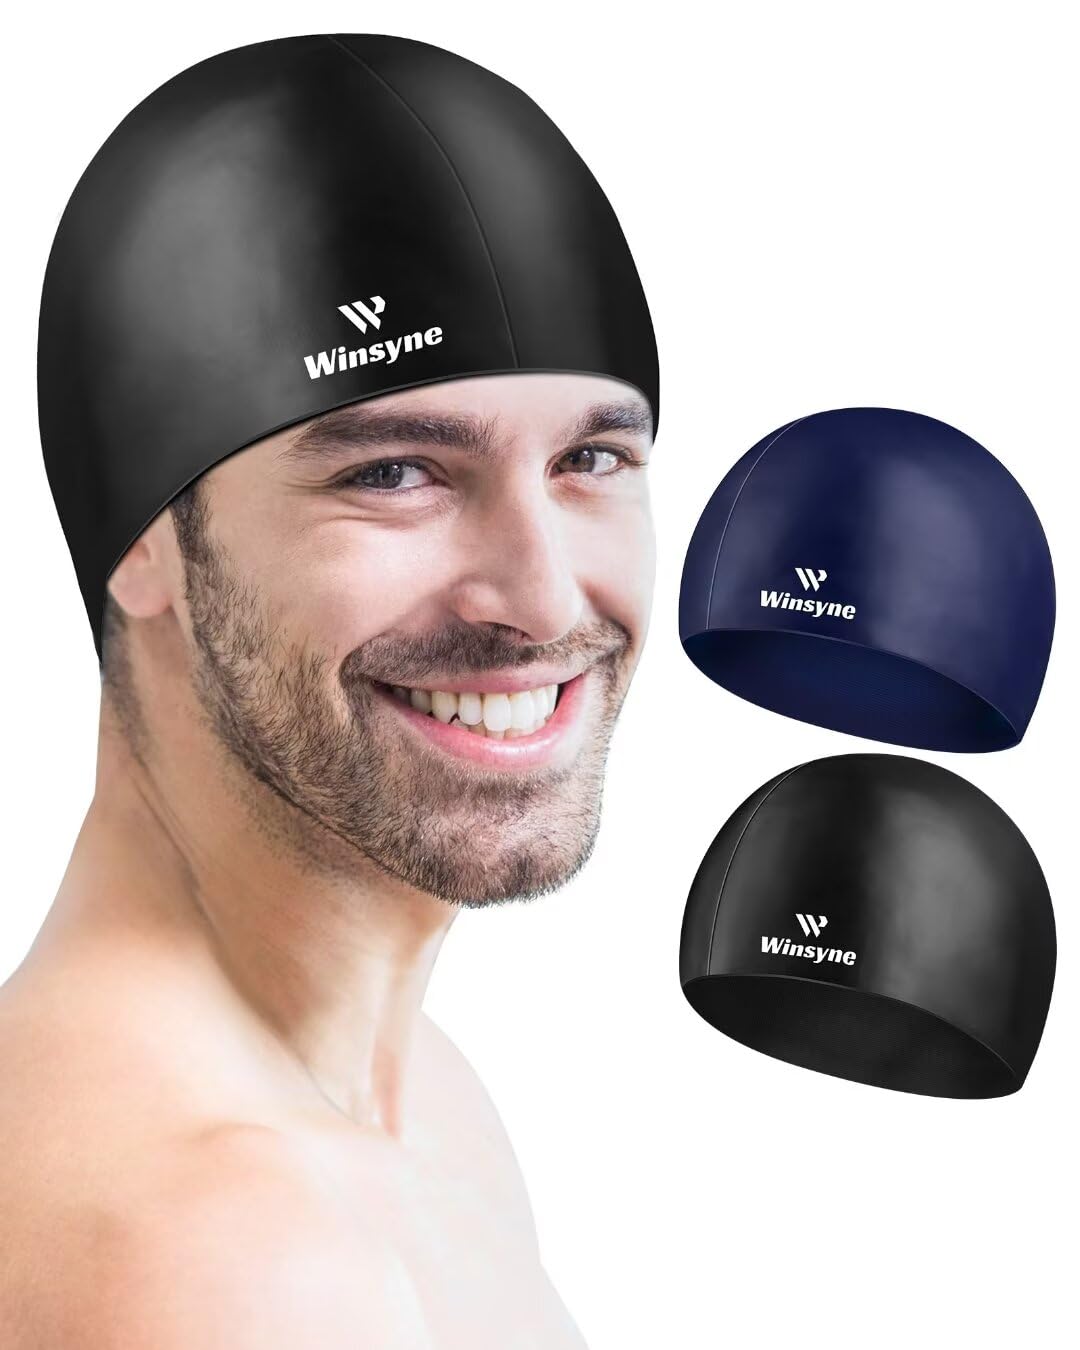 Best Swim Caps for Keeping Hair Dry